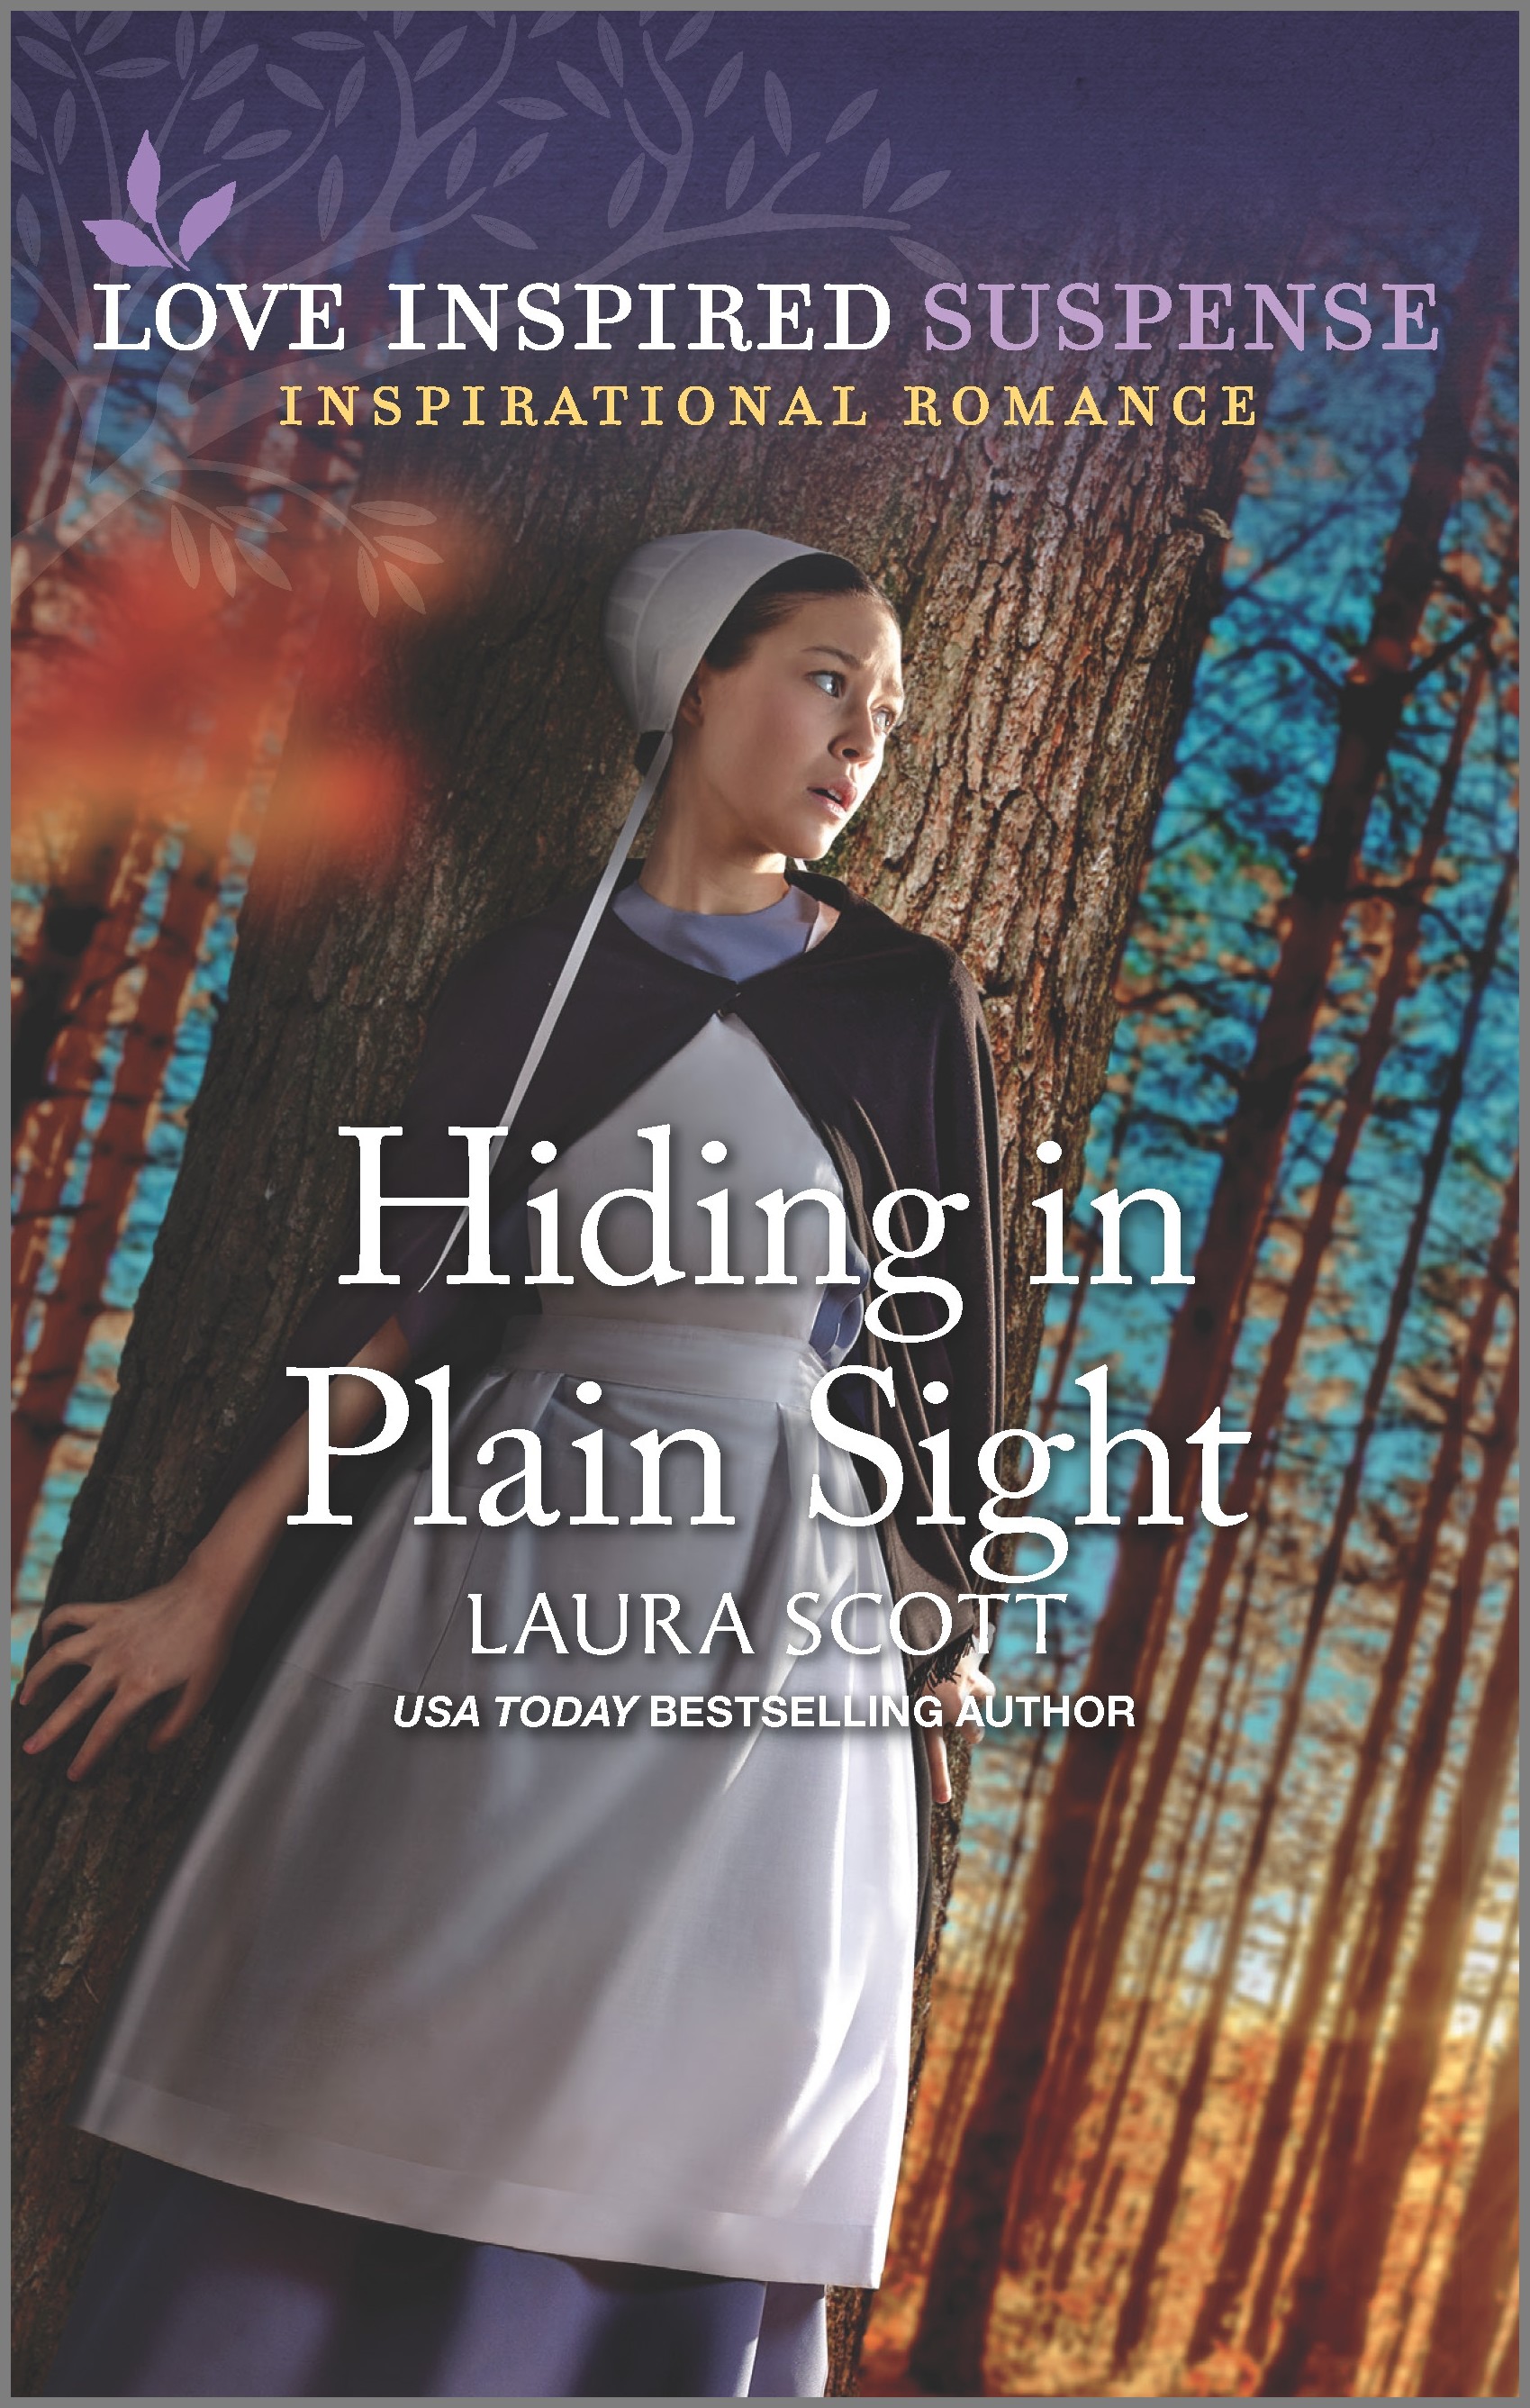 Hiding in Plain Sight by Laura Scott